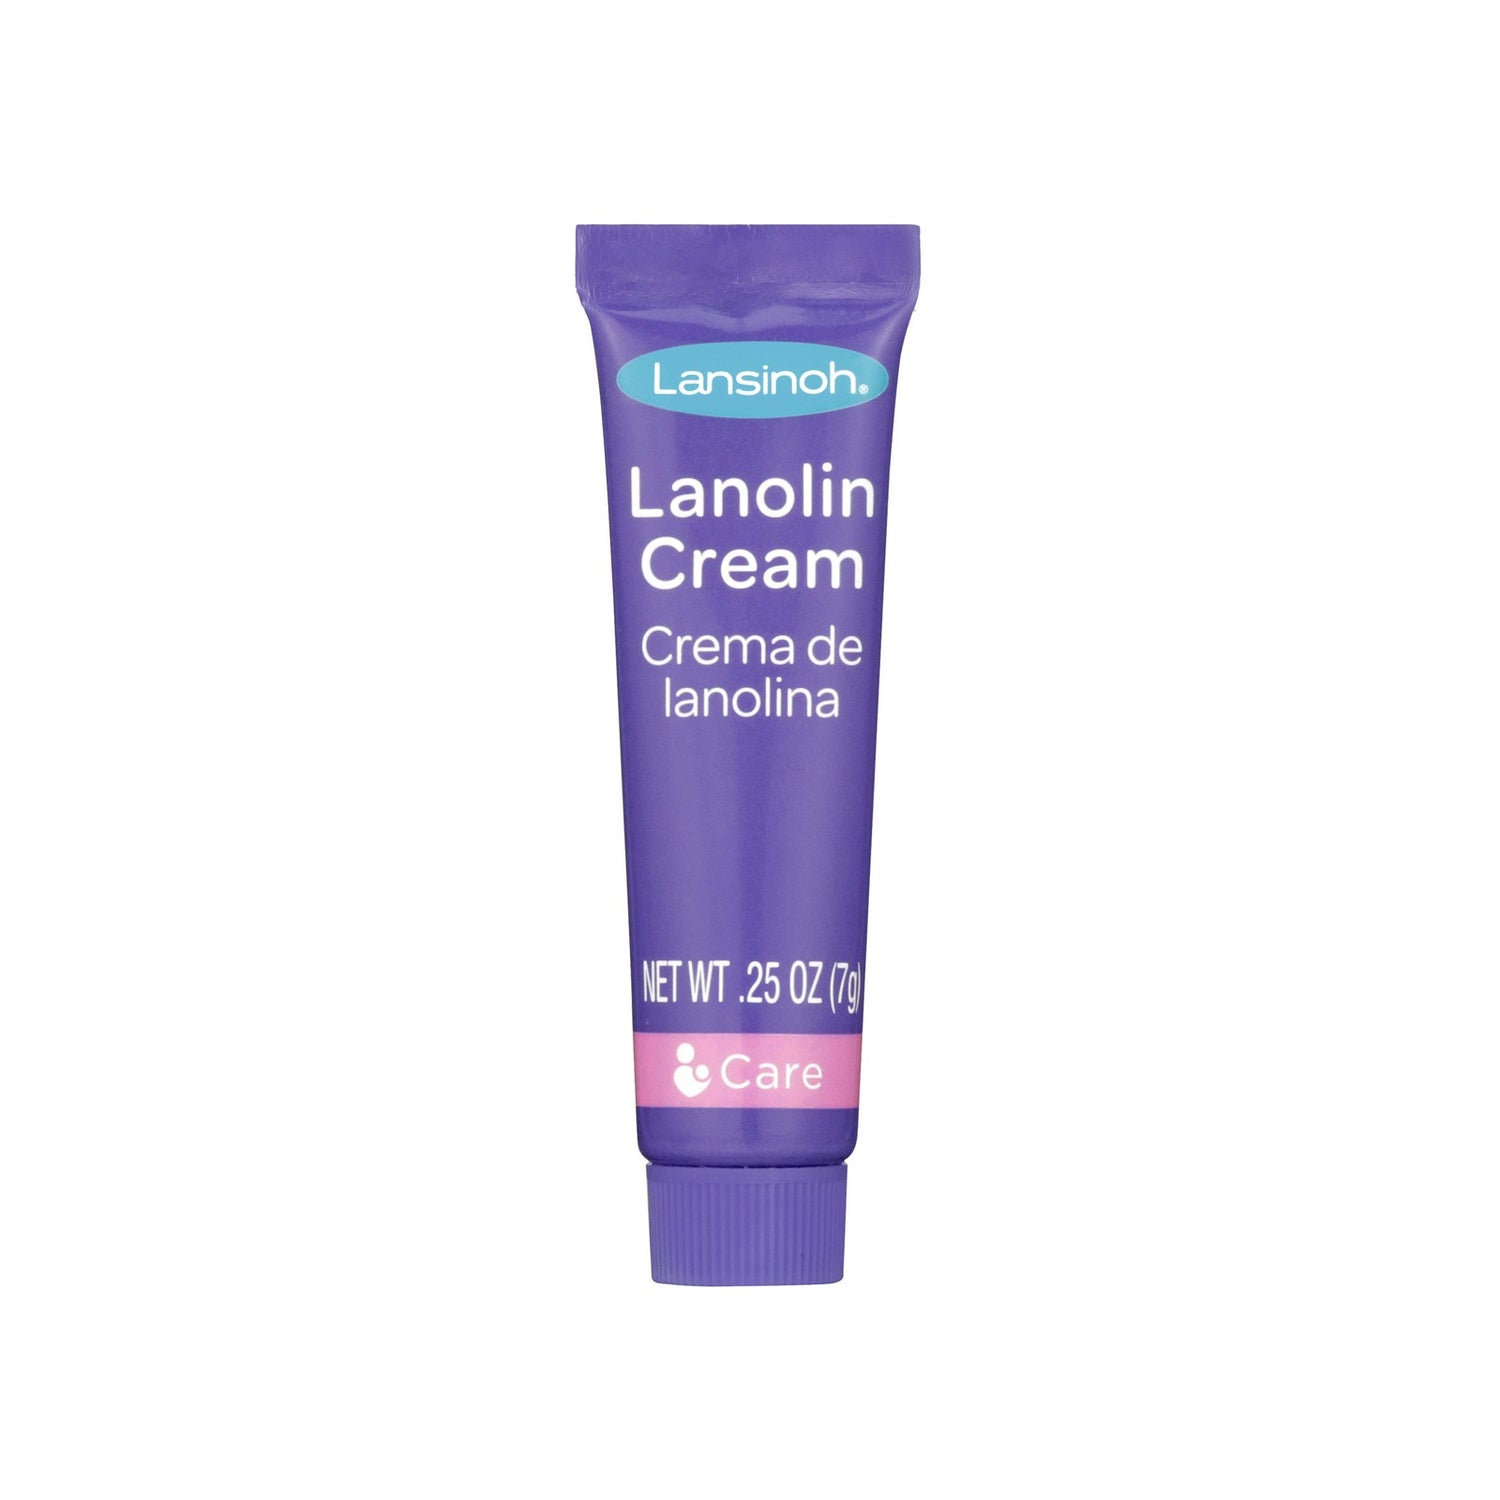 Lanolina HPA® – Crema para pezones agrietados 40ML. Lansinoh